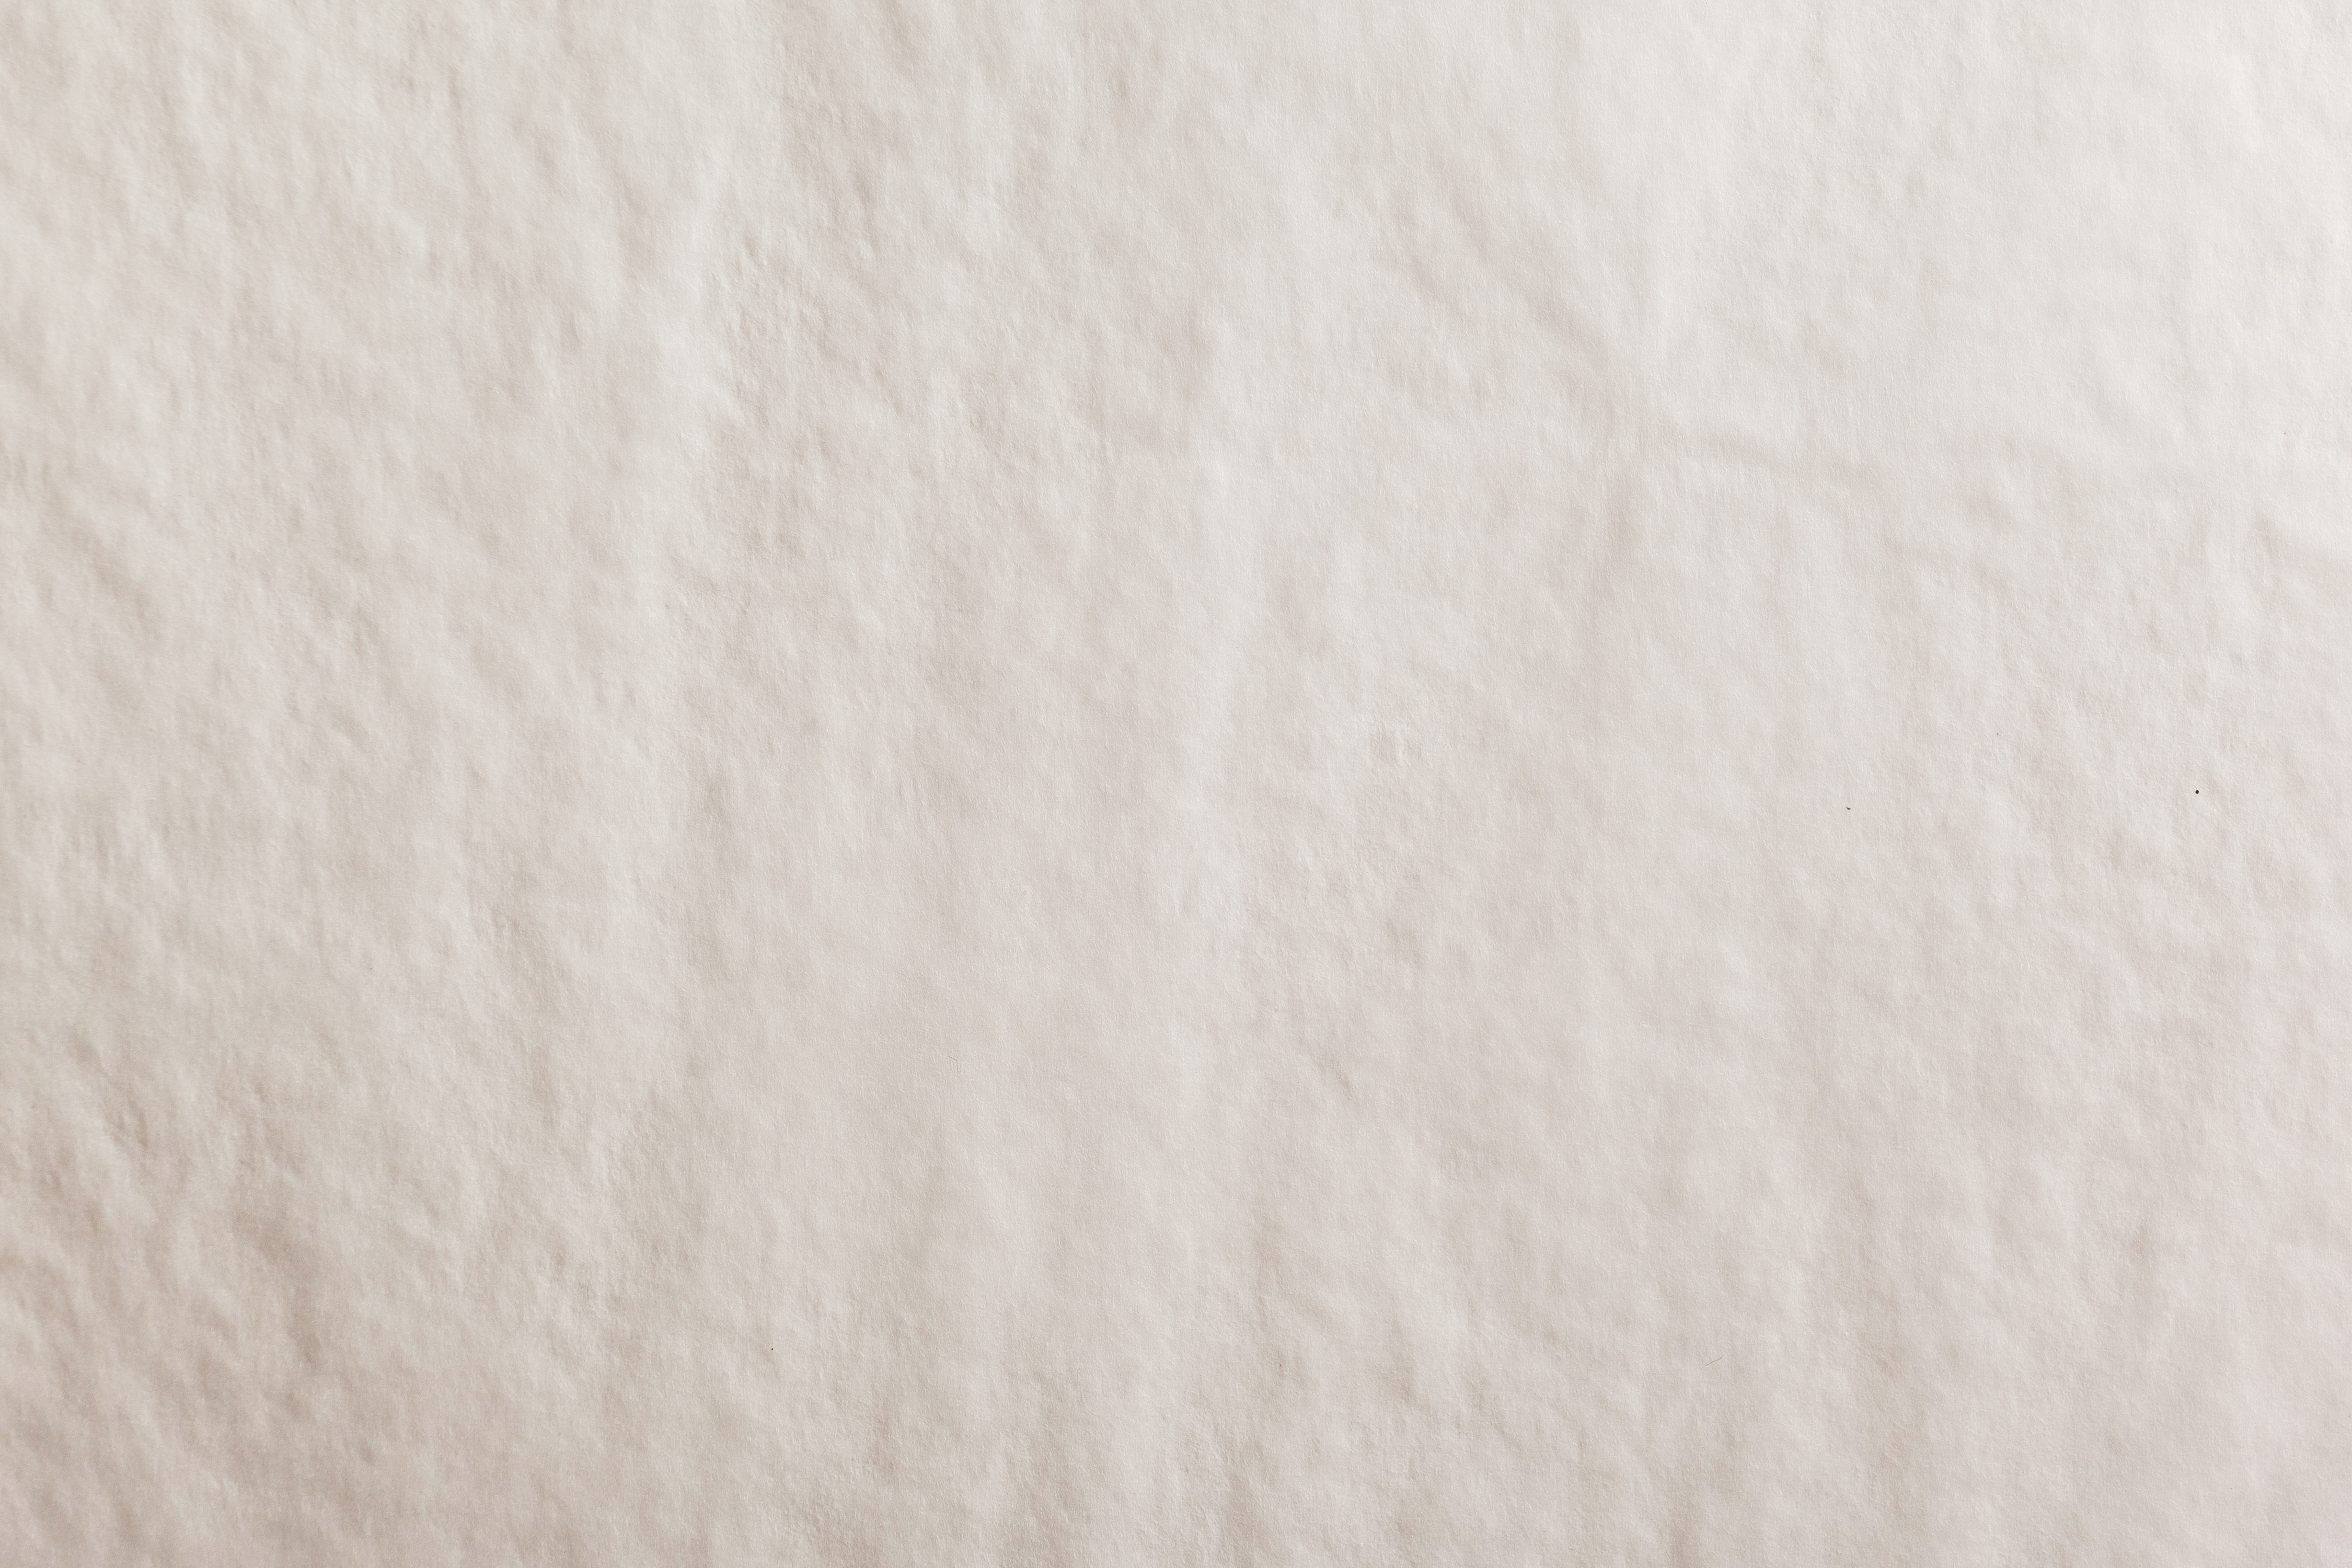 White paper texture photo